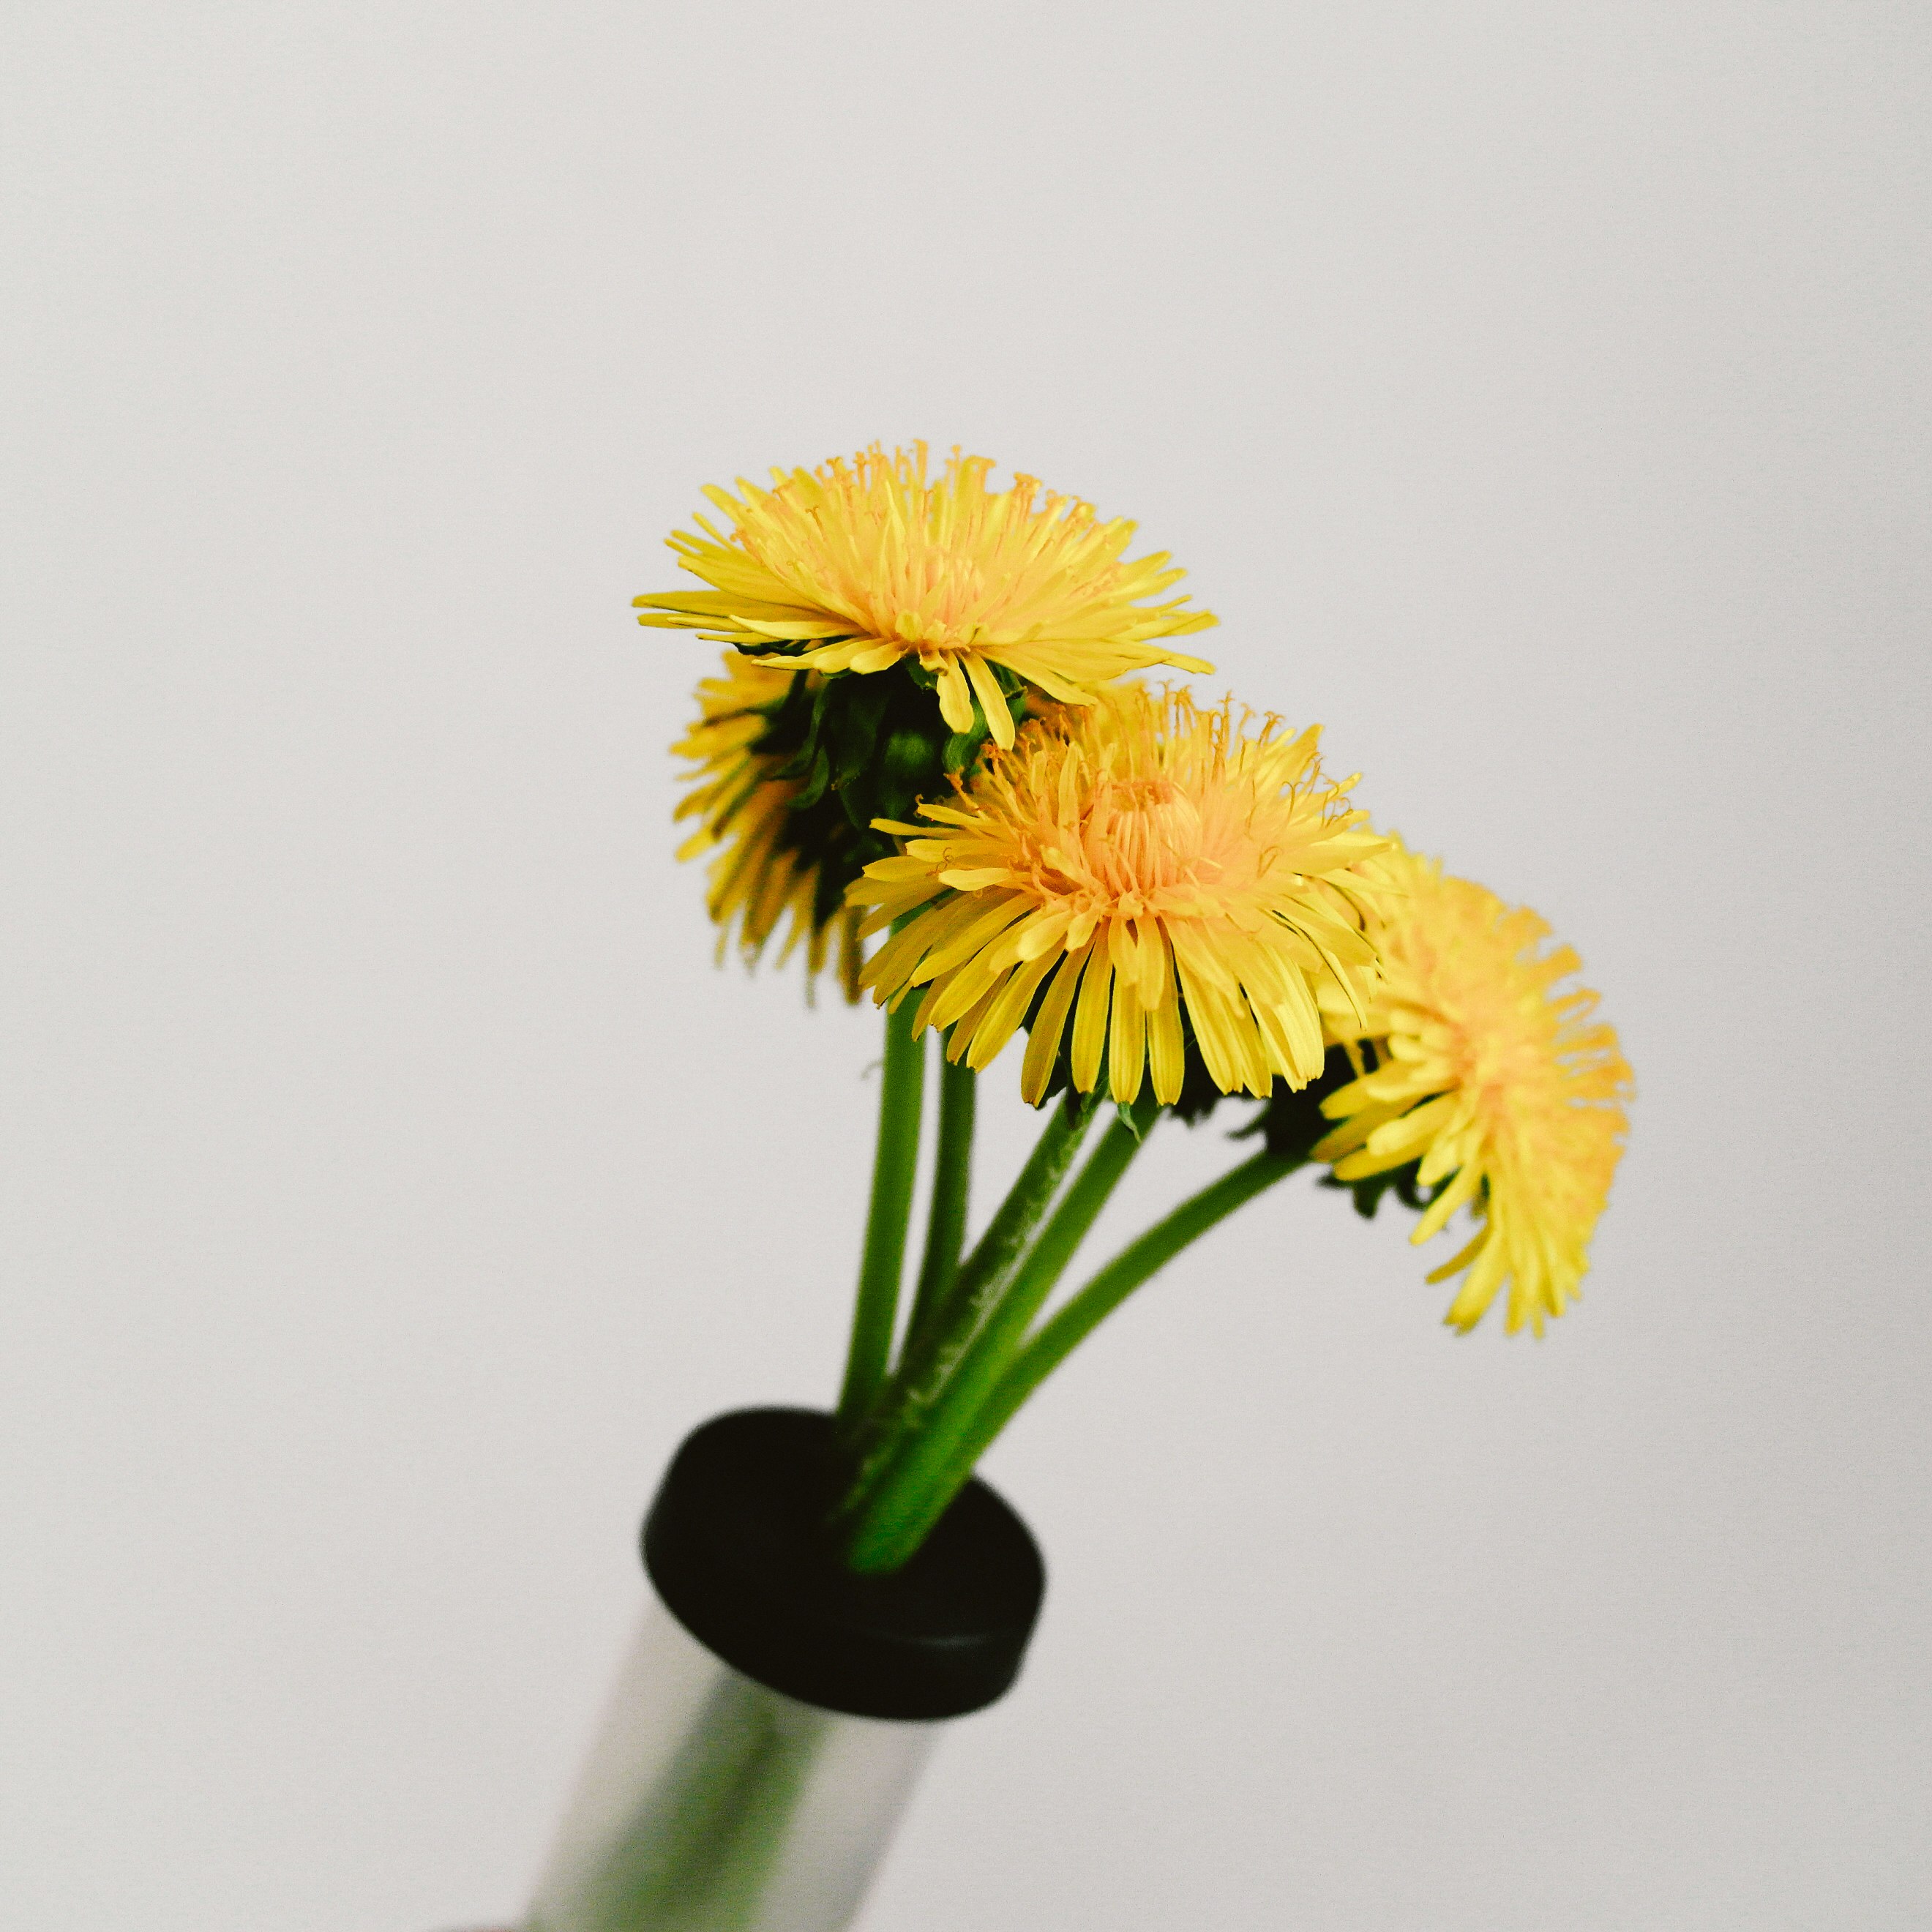 yellow sunflower in green ceramic vase